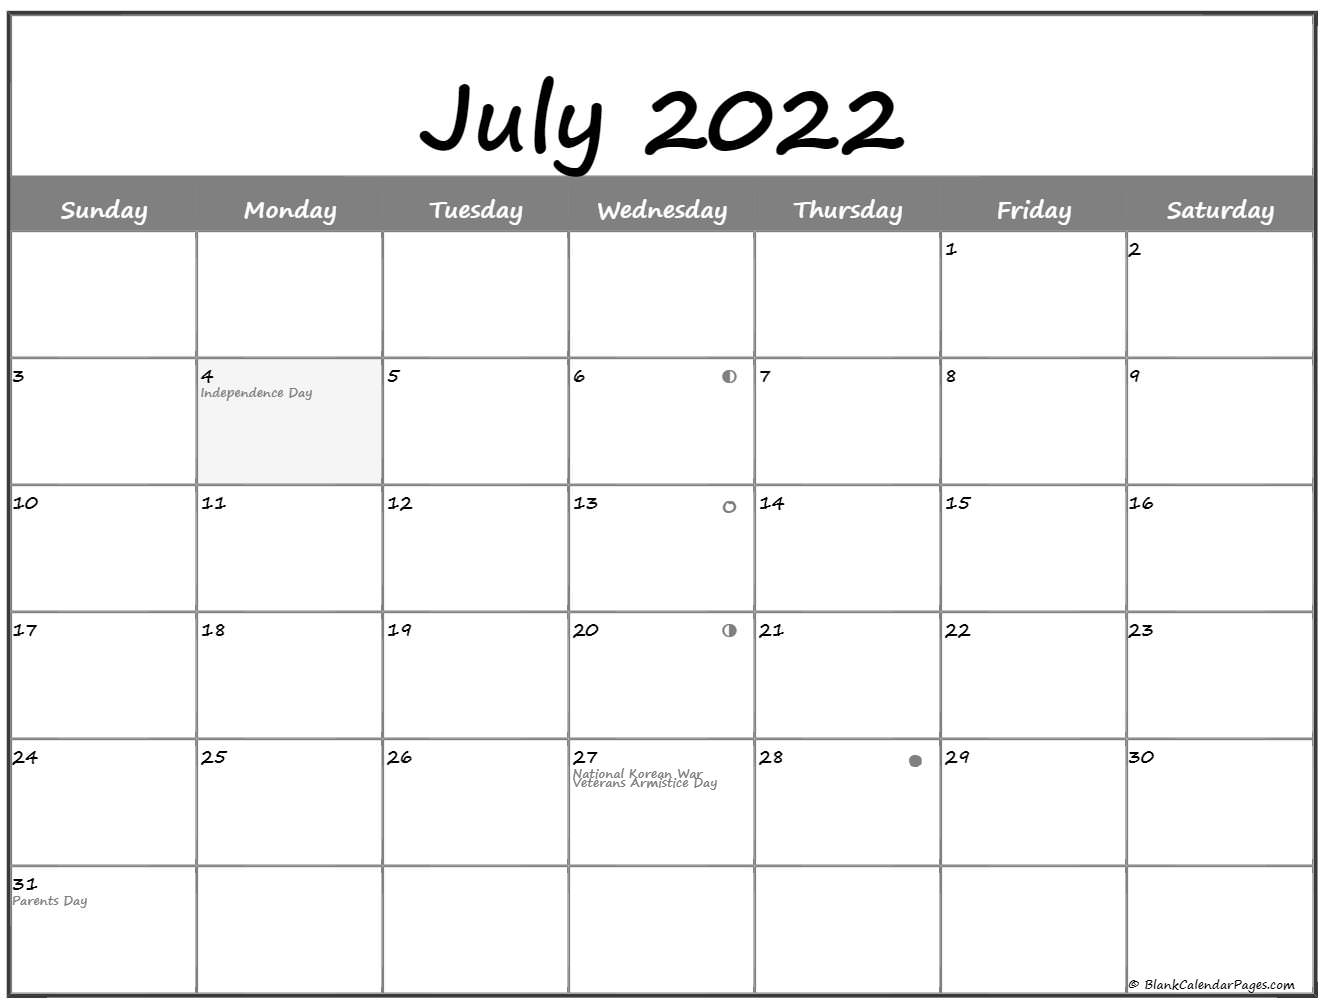 July 2022 Lunar Calendar | Moon Phase Calendar